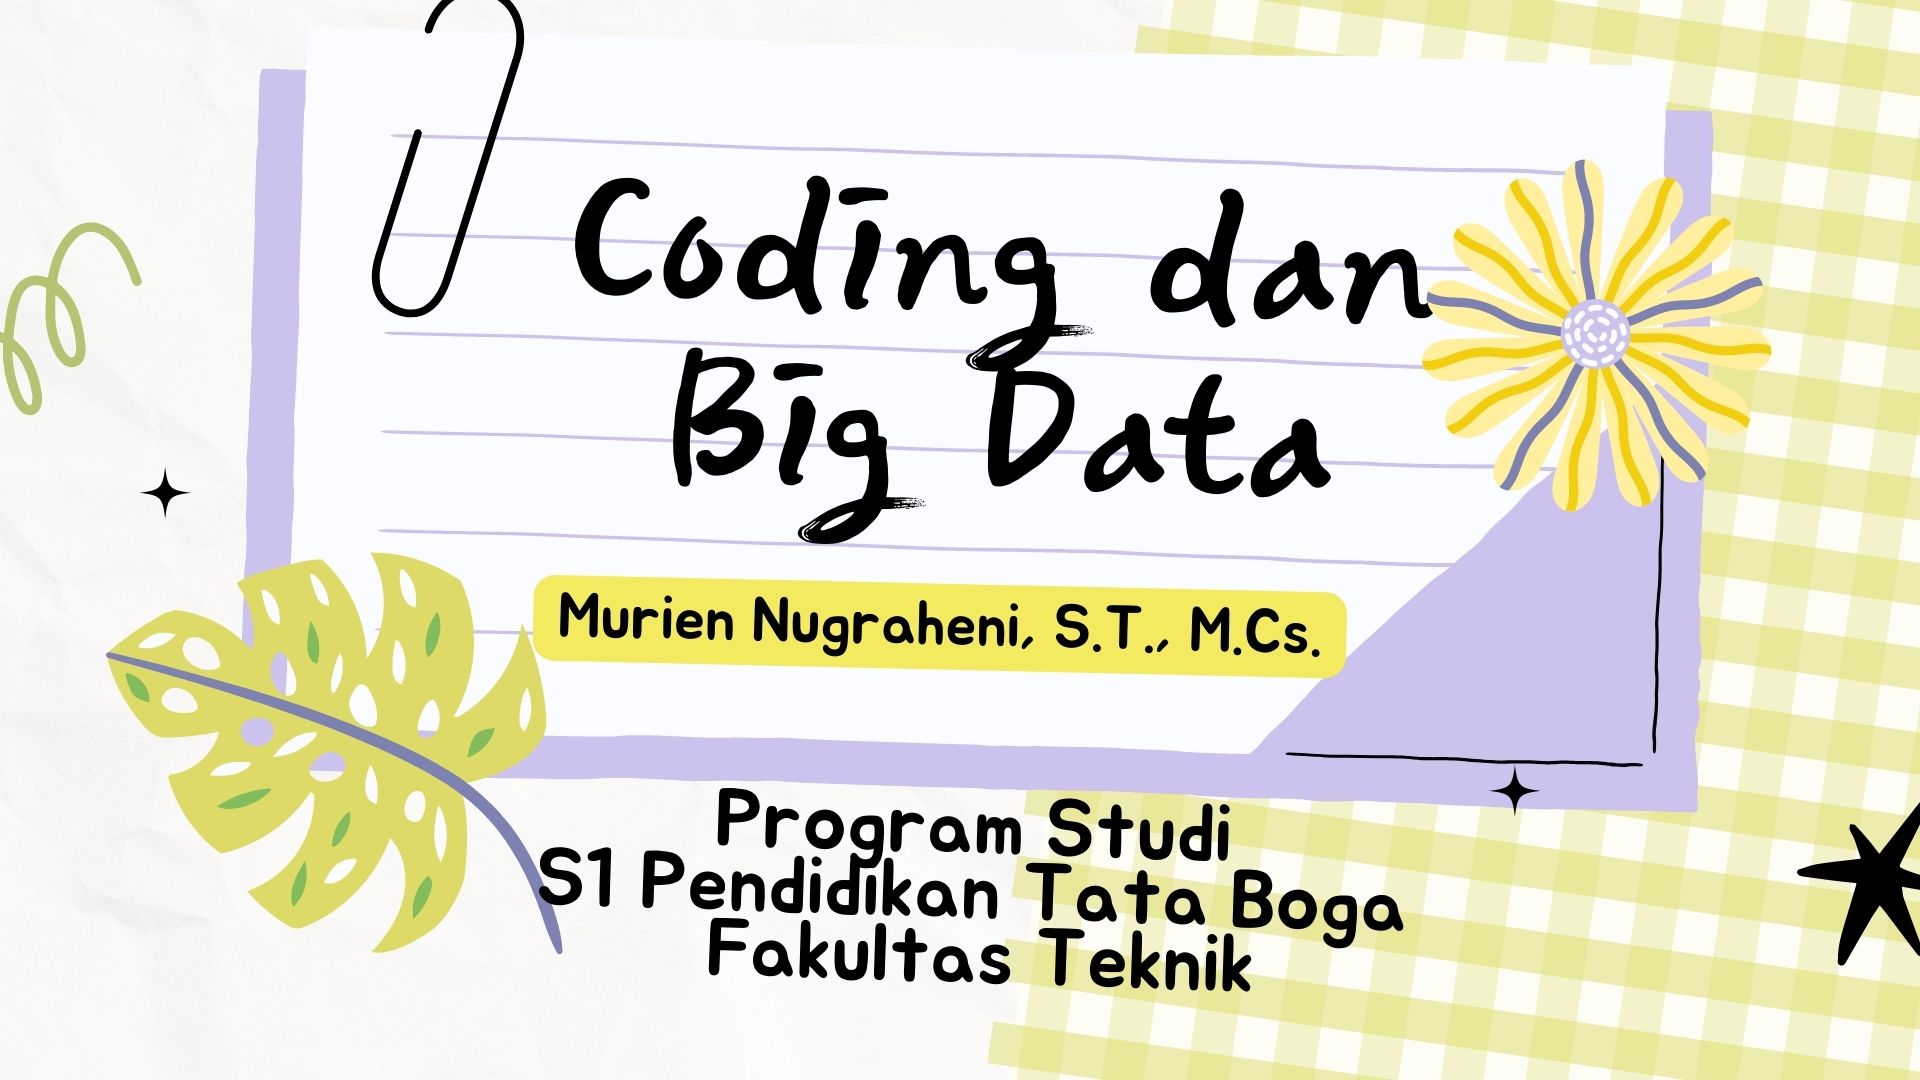 Coding dan Big Data 